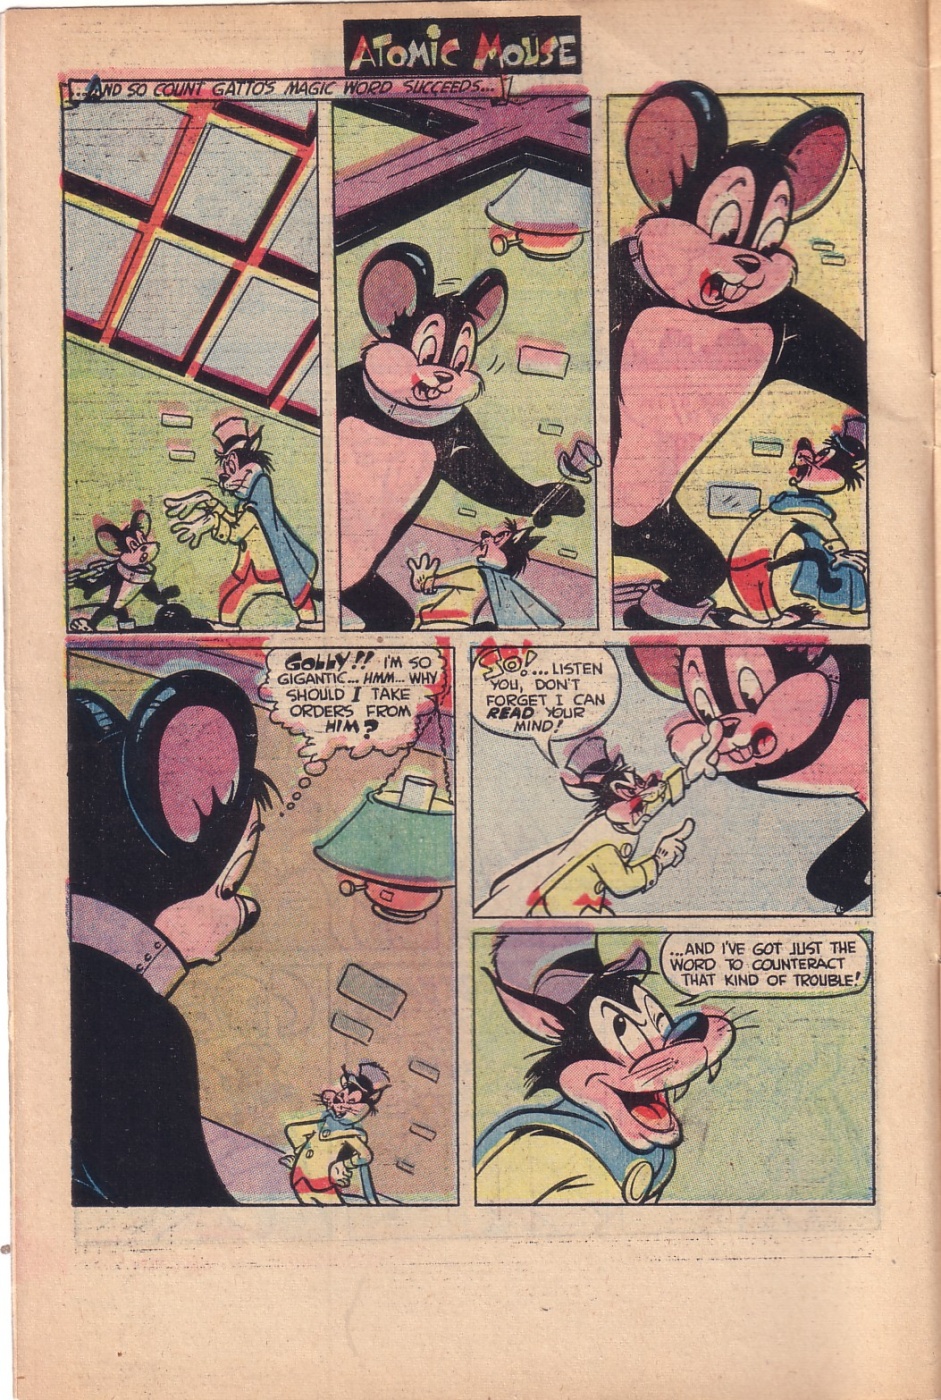 Atomic Mouse Comics - Funny Comics (6)